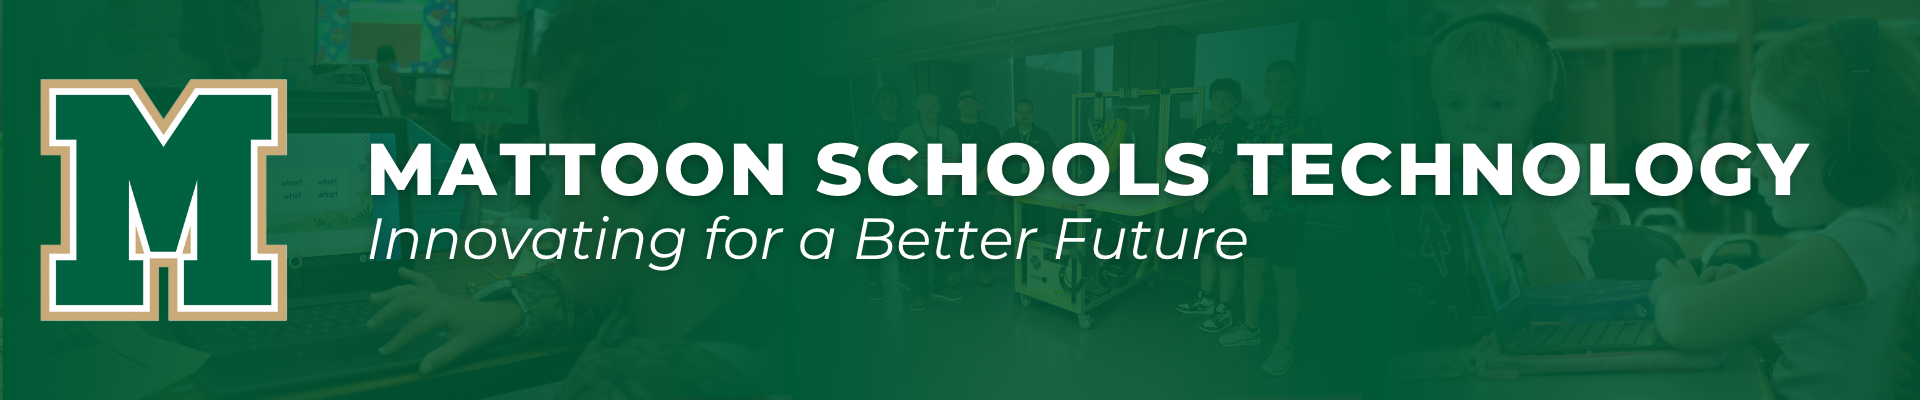 Mattoon Schools Technology - Innovating for a Better Future